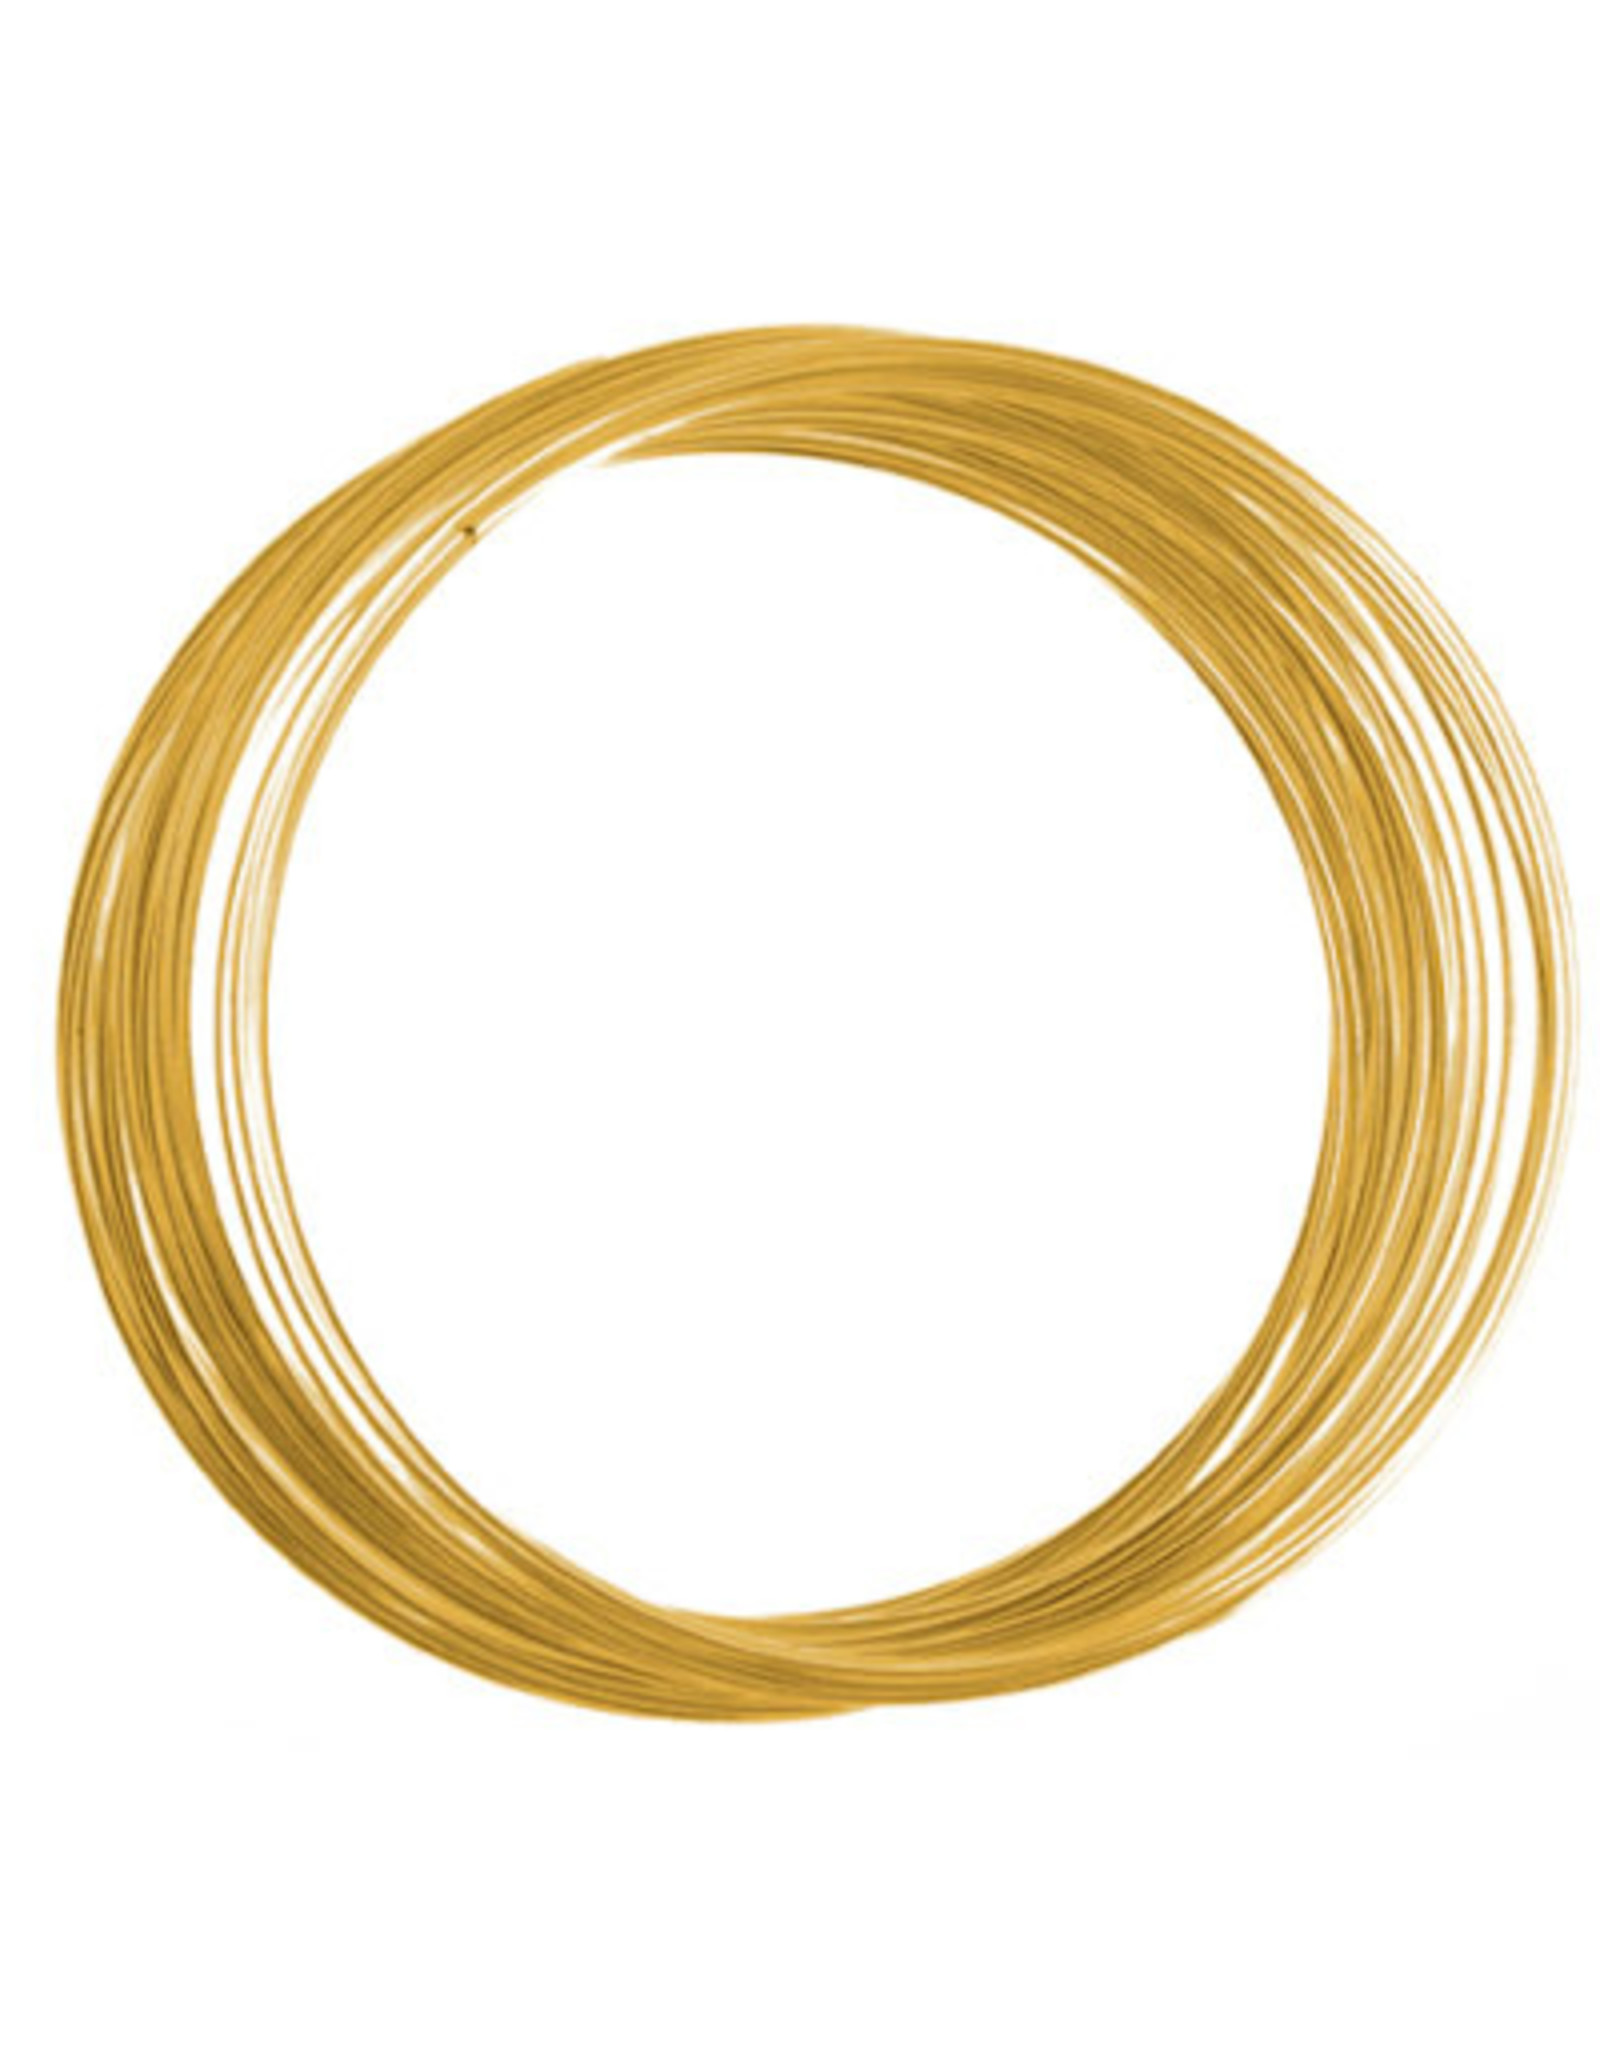 Memory Wire Bracelet Gold  .5oz  2.25-2.63''